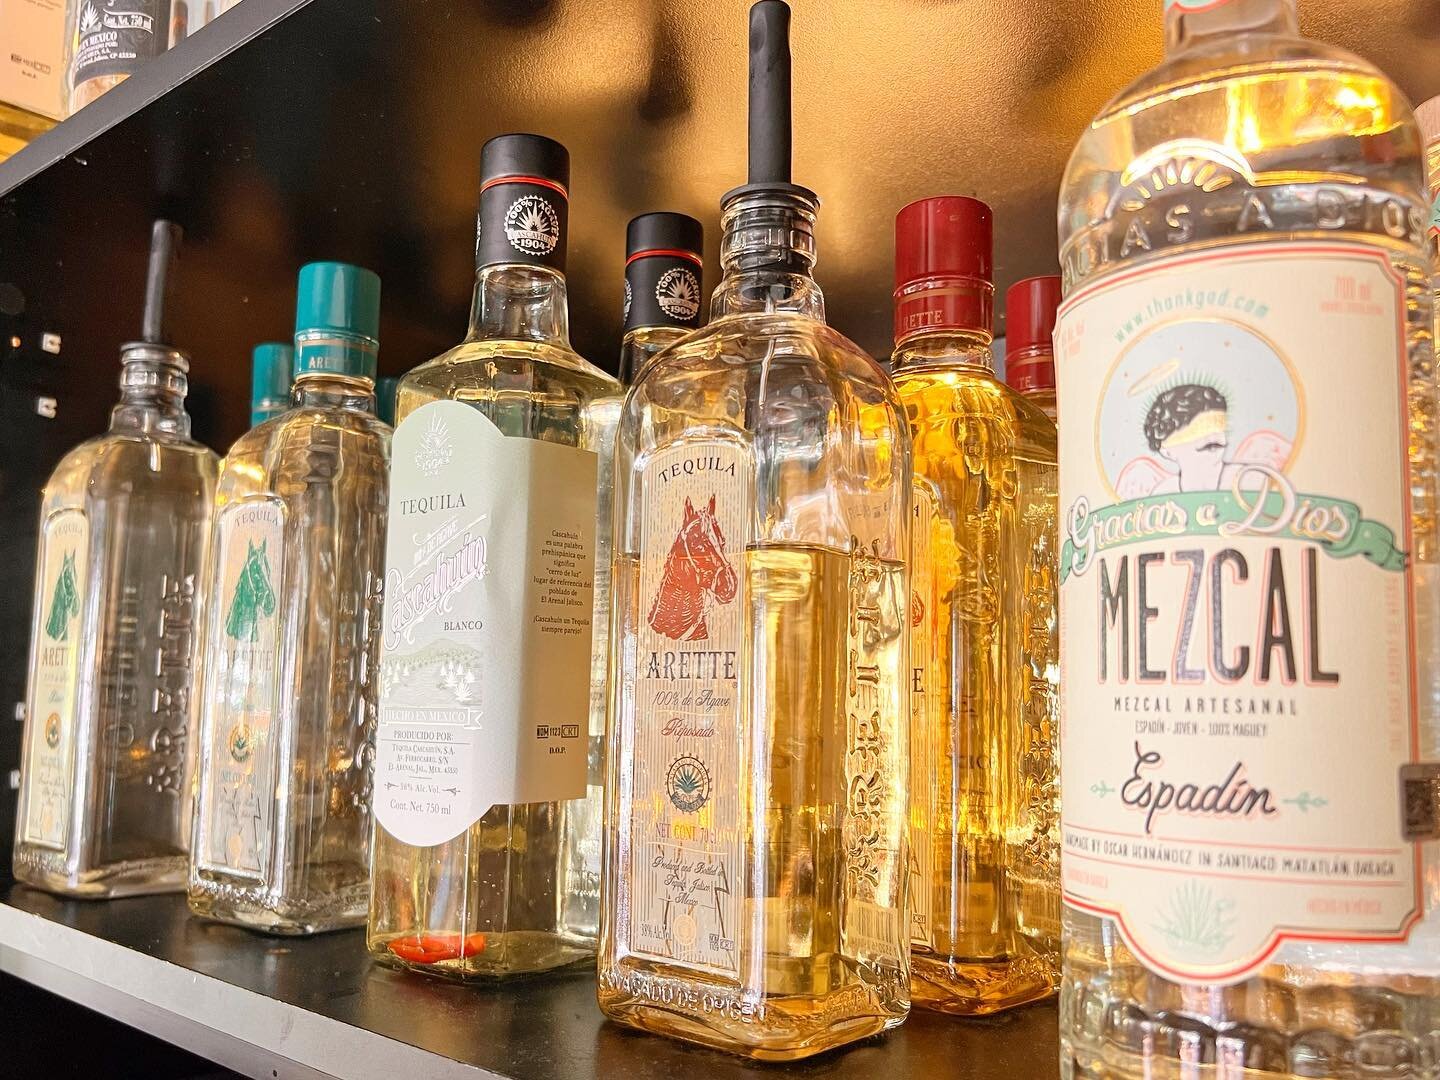 Tequila or Mezcal&hellip;Por qu&eacute; no los dos?

#chihuahuabyronbay #byronbaycocktails #mezcallovers #byronbaytacos